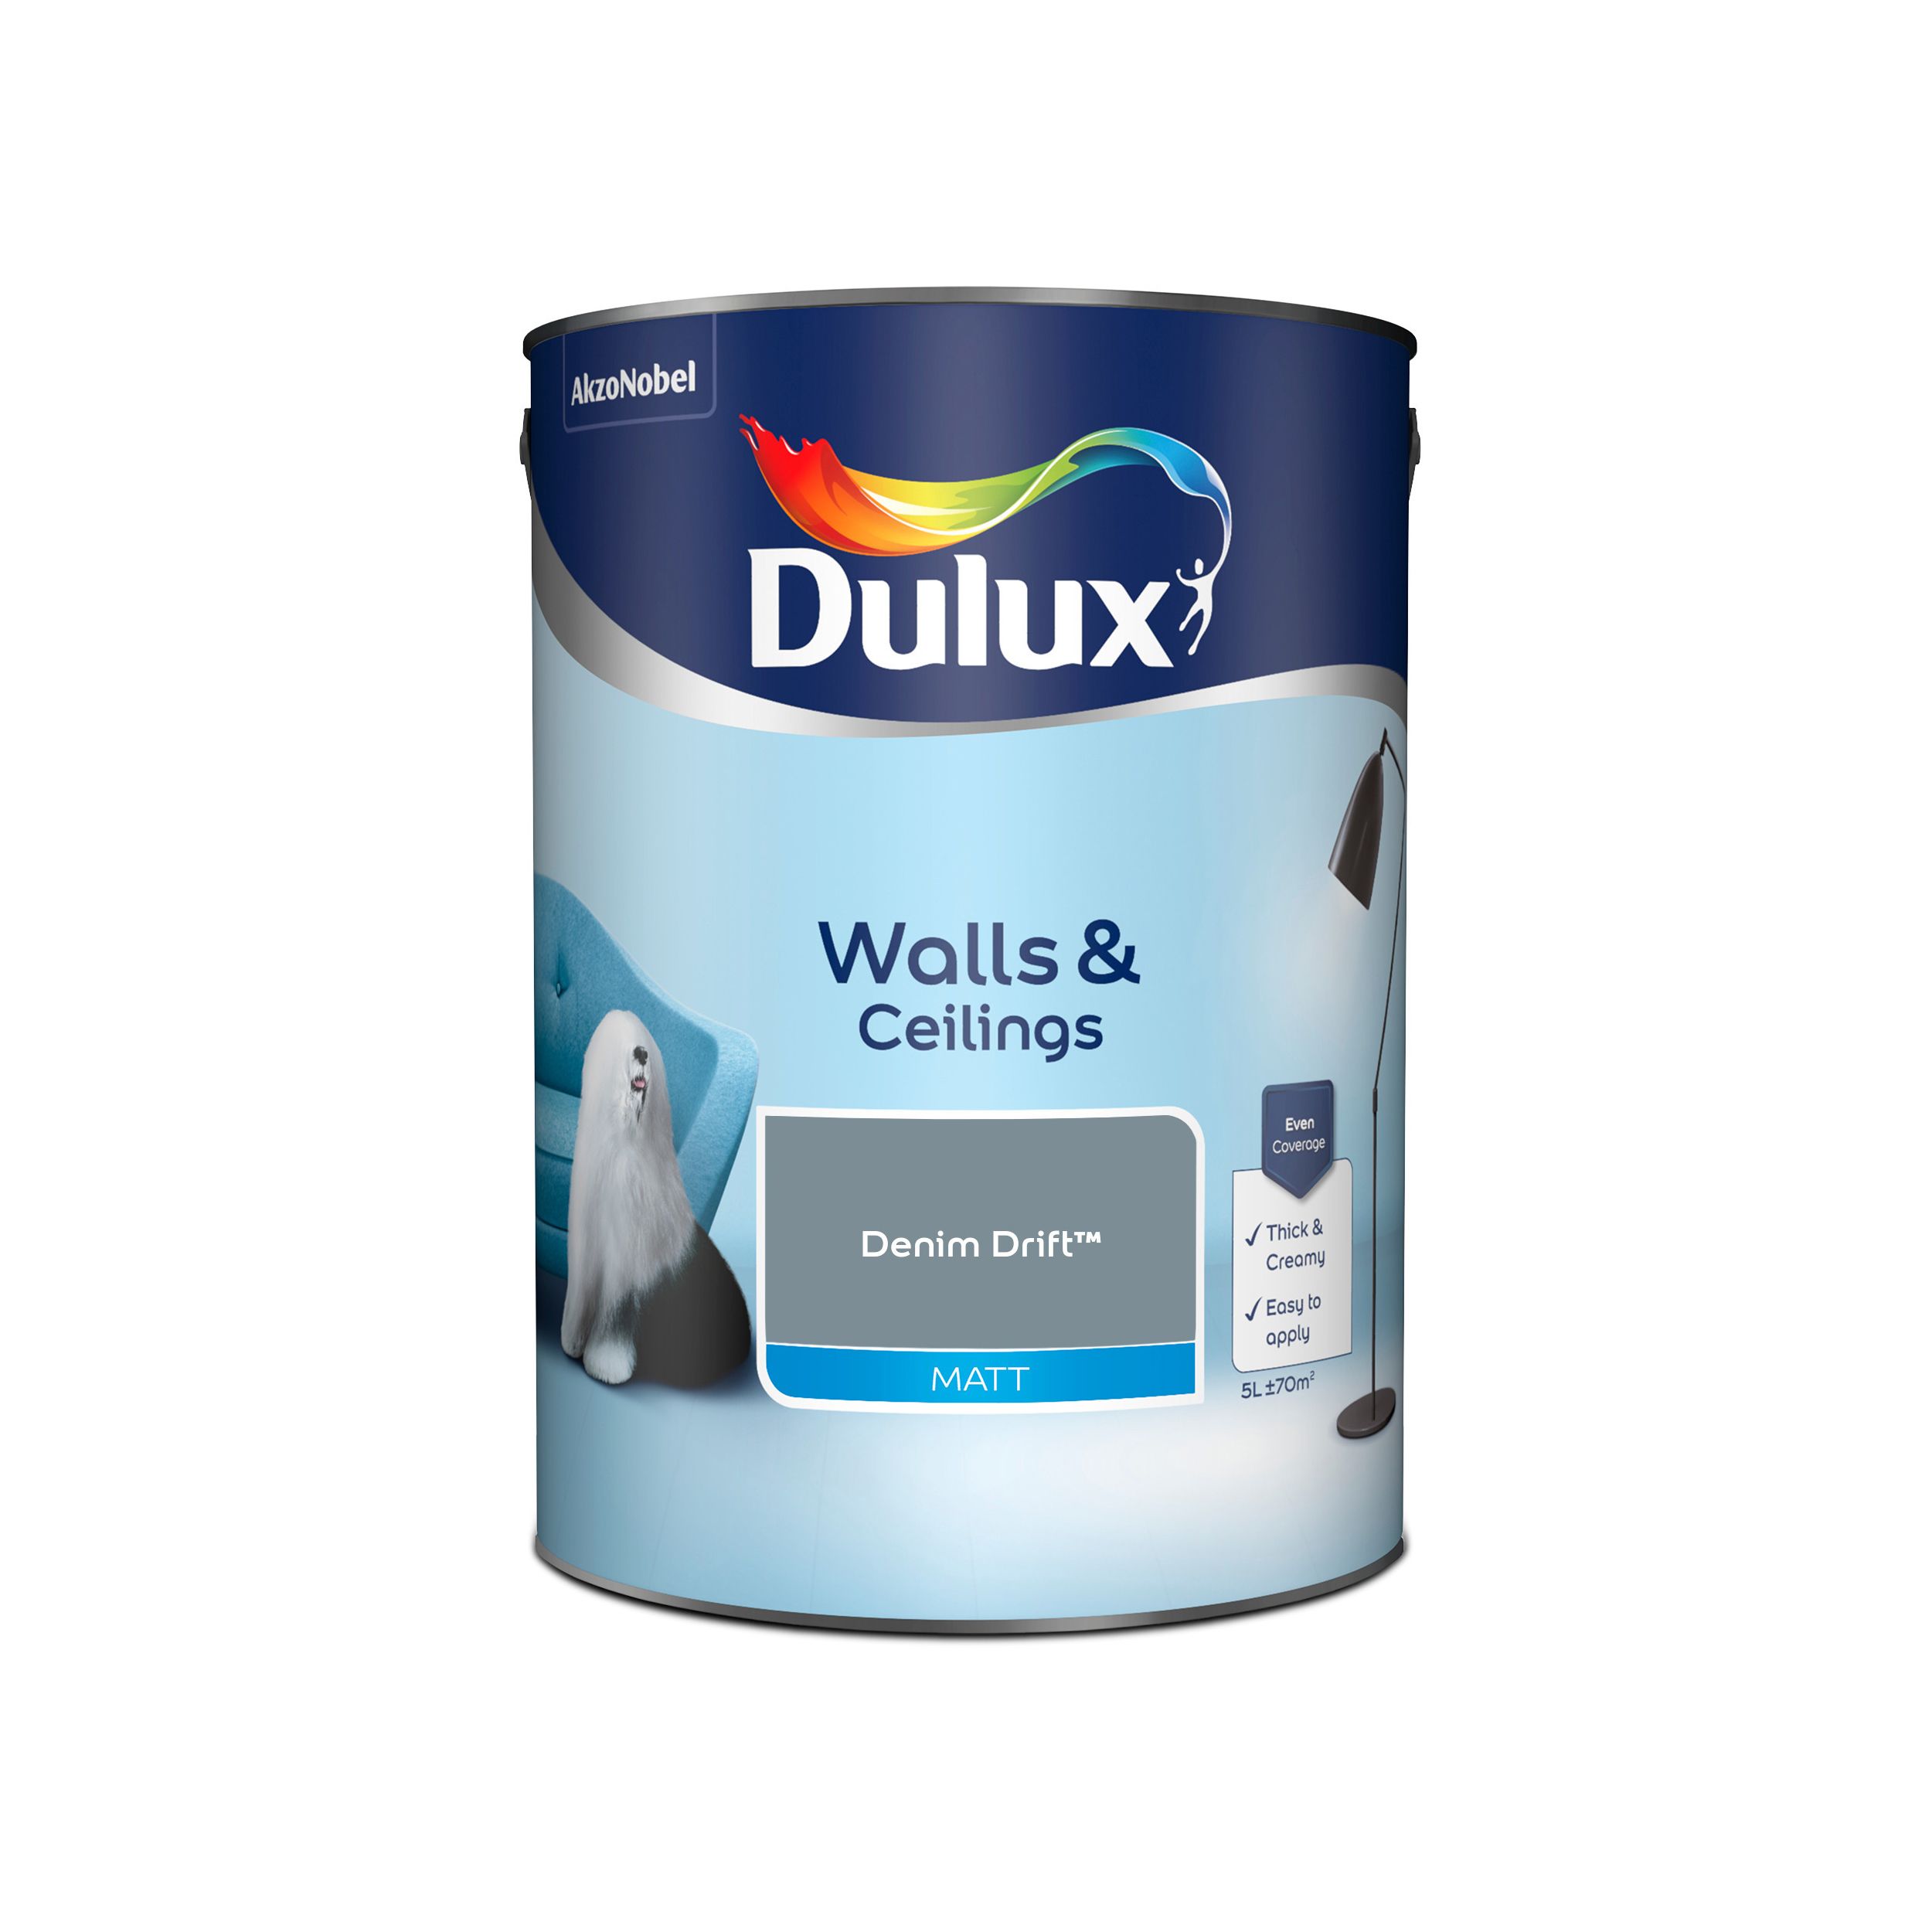 Dulux Walls & ceilings Denim drift Matt Emulsion paint, 5L